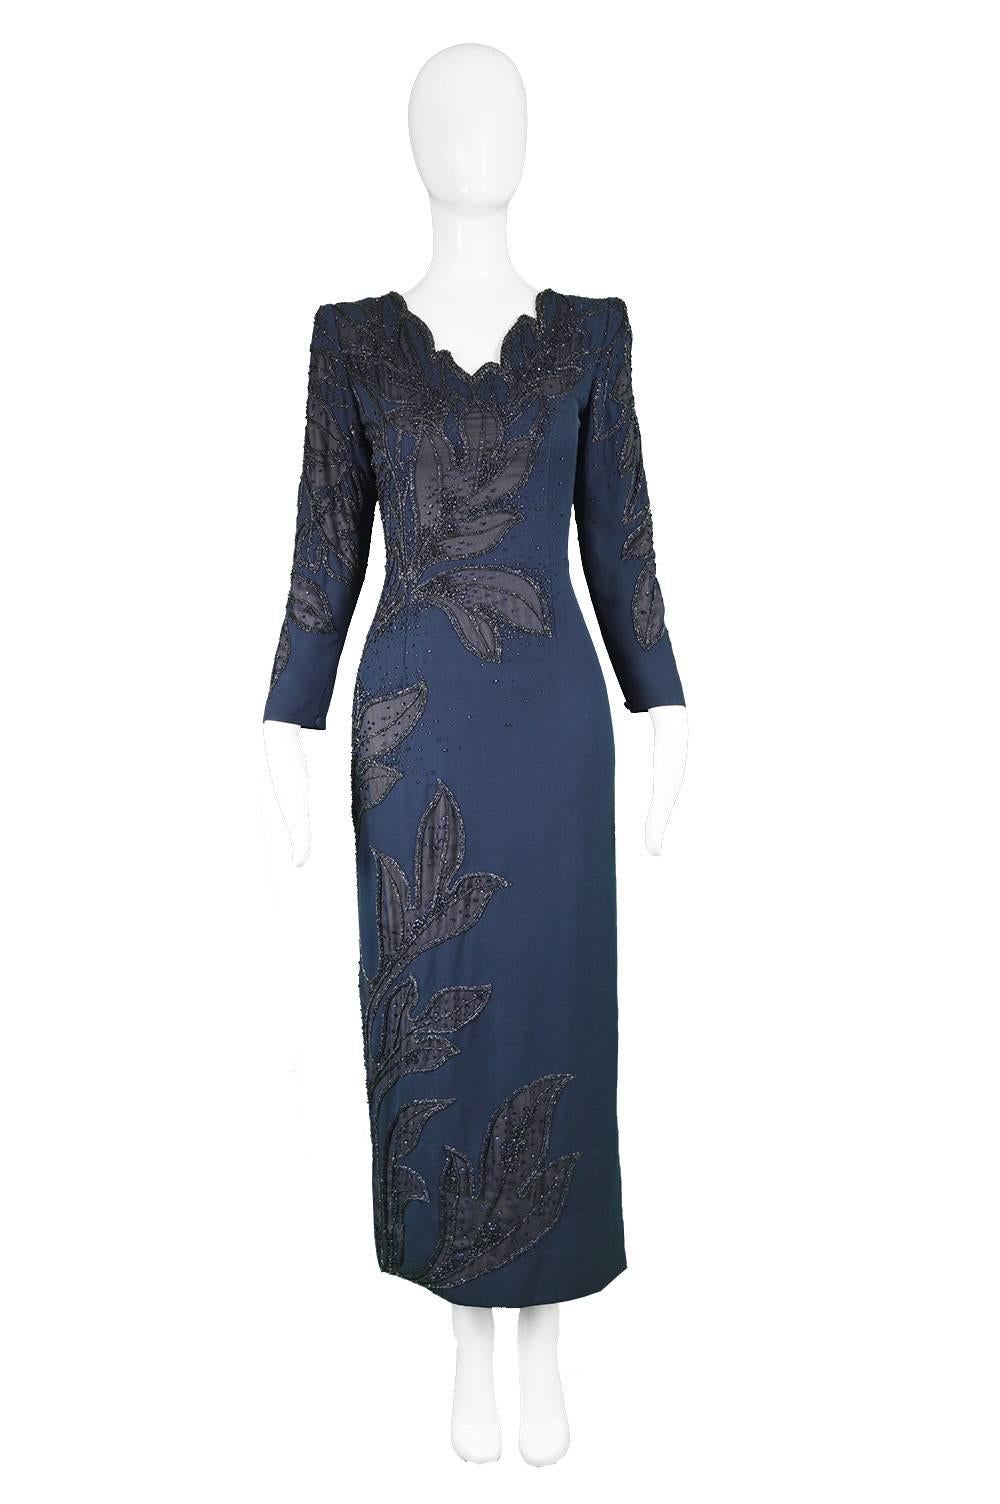 Renato Balestra Italian Couture Vintage Heavily Beaded Evening Gown, 1980s 

Estimated Size: UK 8/ US 4/ EU 36. Please check measurements. 
Bust - 32” / 81cm
Waist - 26” / 66cm
Hips - 36” / 91cm
Length (Shoulder to Hem) - 53” / 135cm
Shoulder to